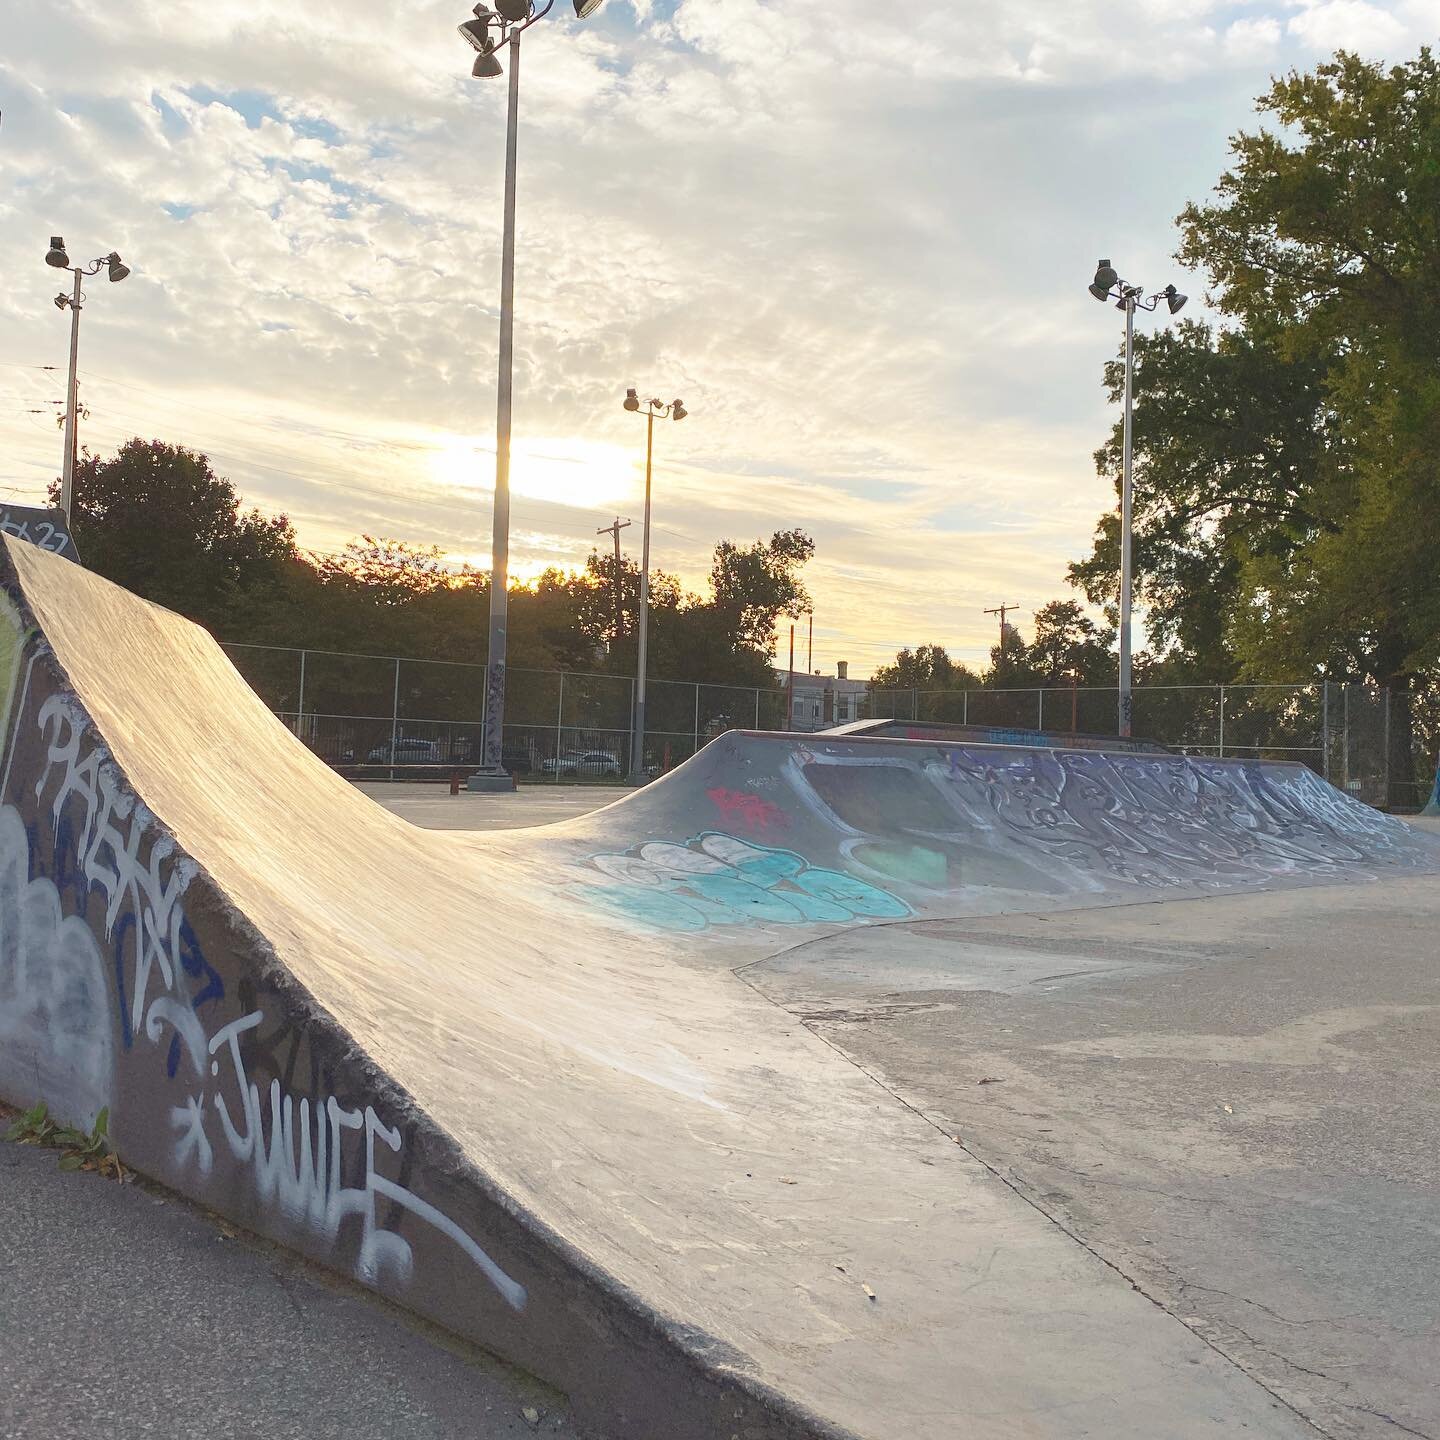 Some nice lines from Whitehall Skatepark in North Philly ⚡️⚡️

#skateboarding #philly #skatepark